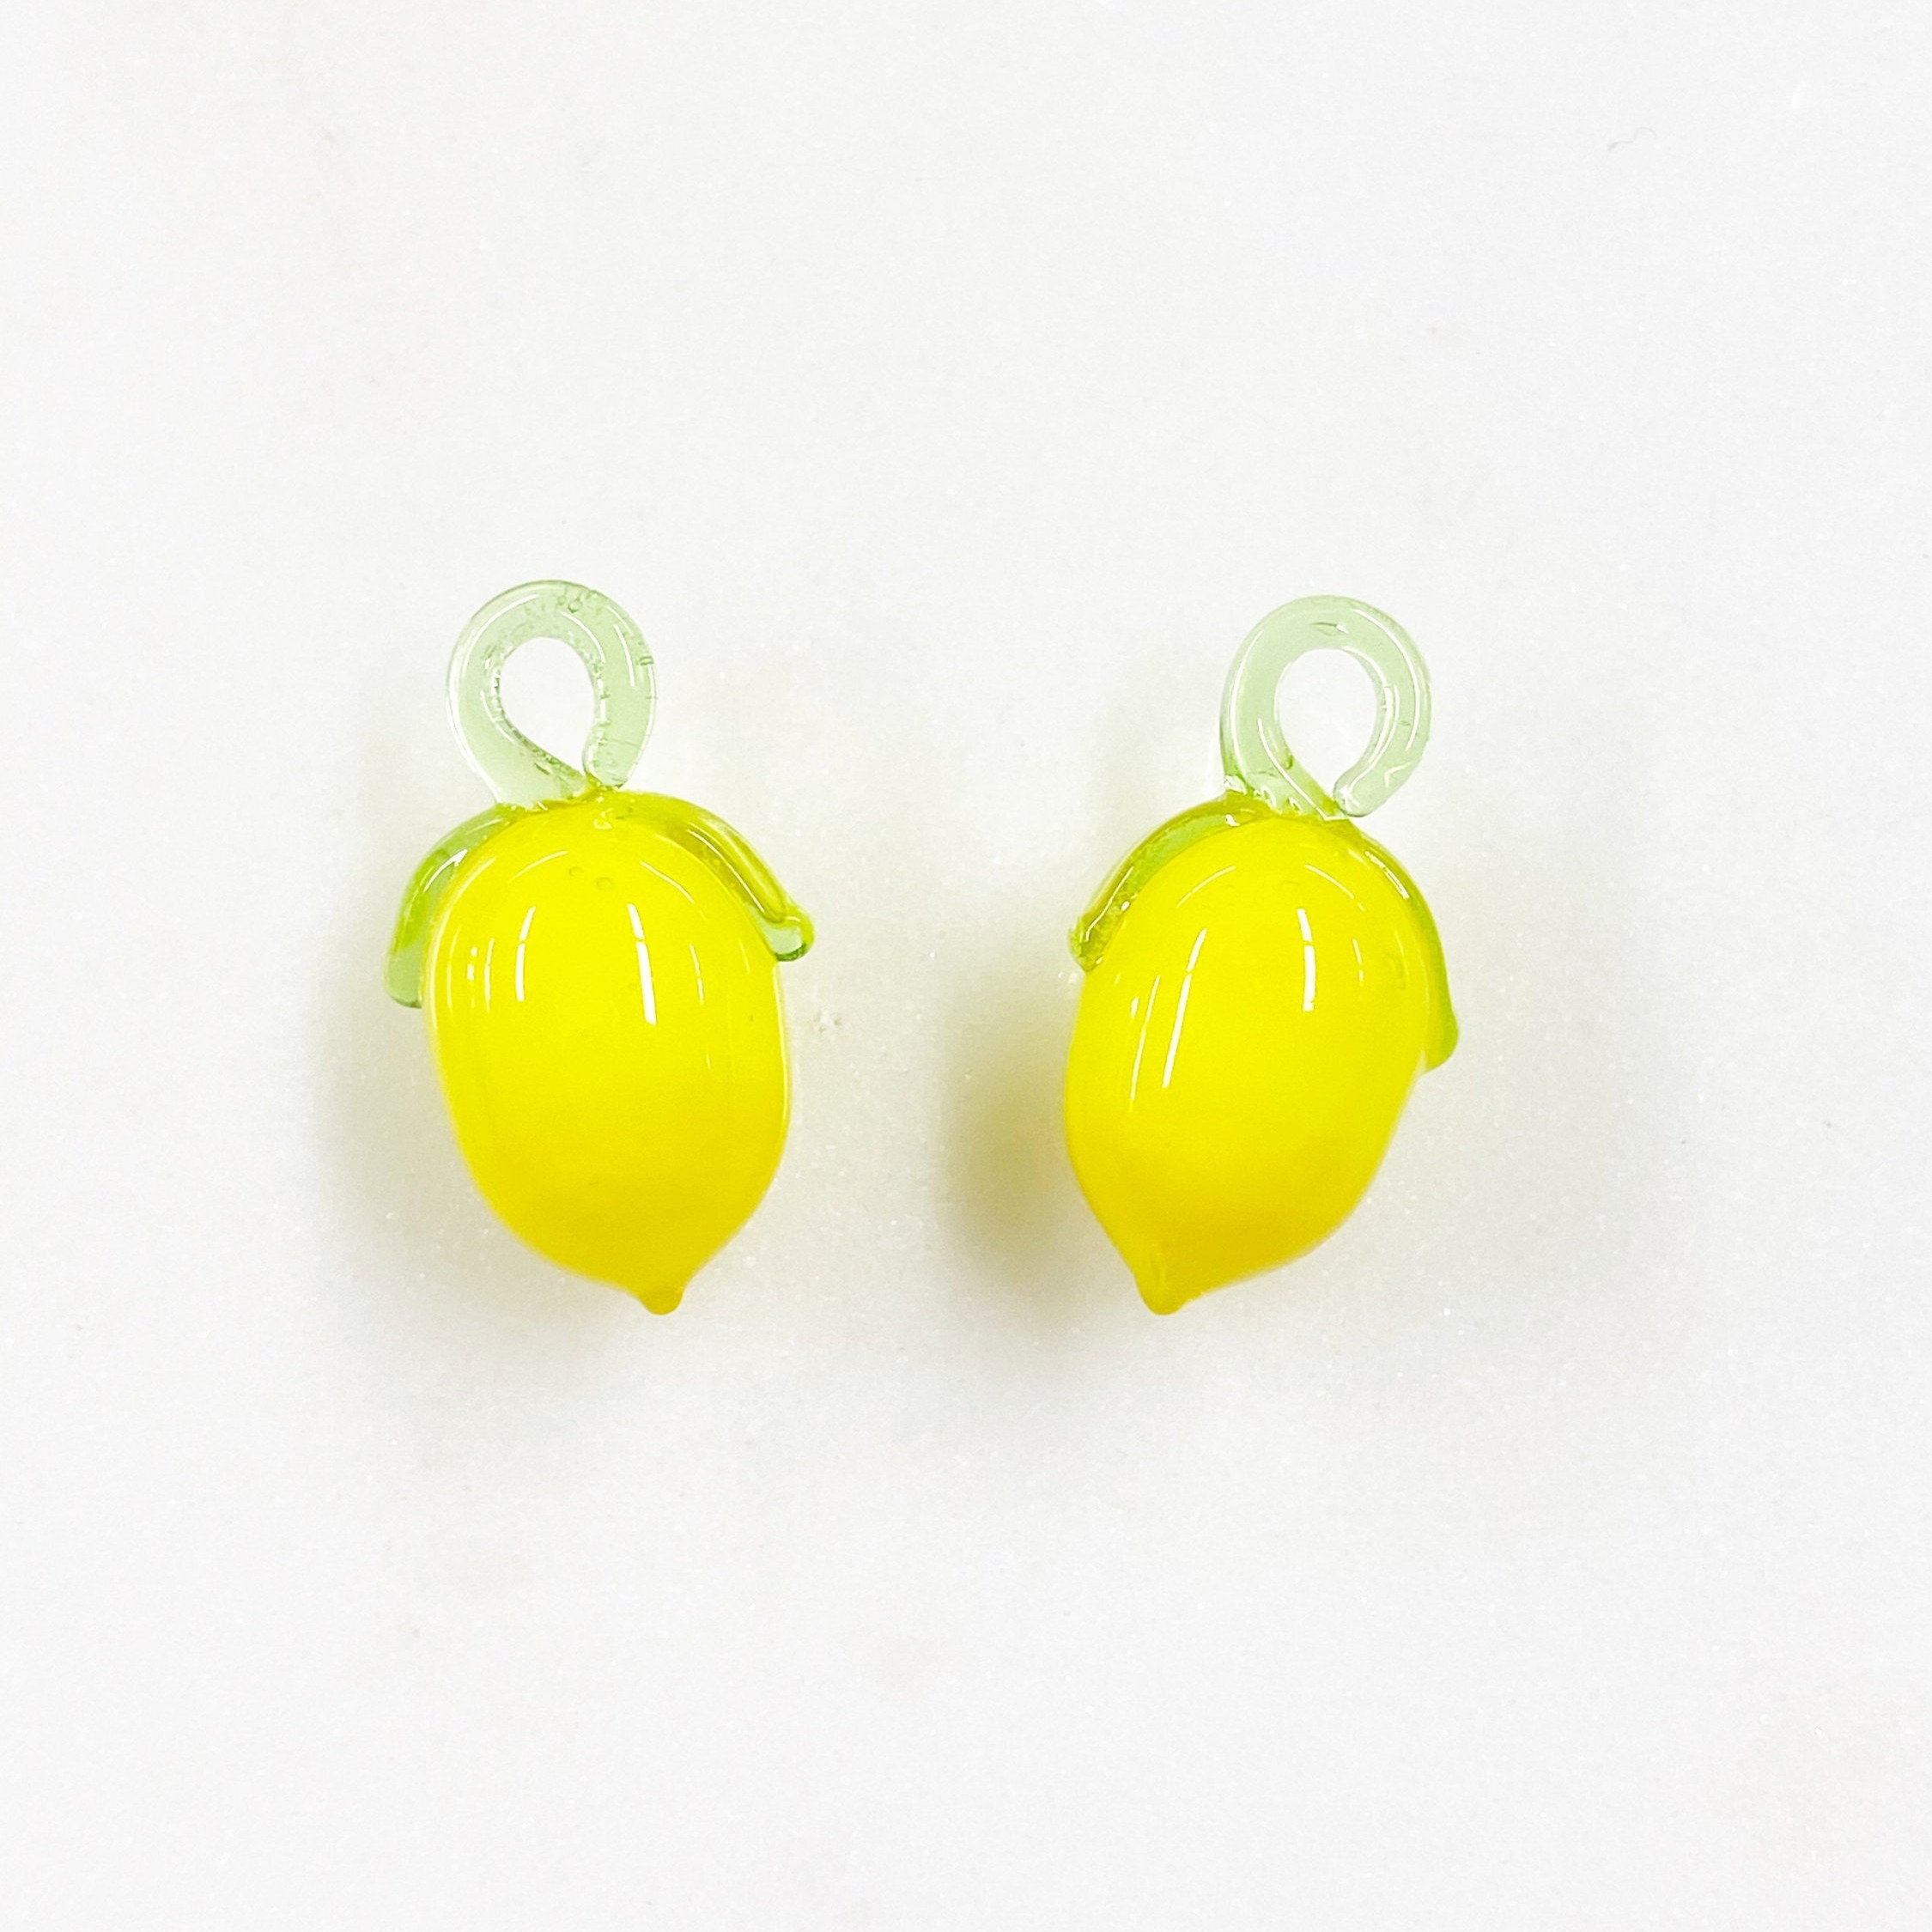 SUNNYCLUE 1 Box 36pcs Lemon Charm Lemon Enamel Charms Yellow Fruit Rabbit Easter Holiday Bunny Charms for Jewelry Making Charm